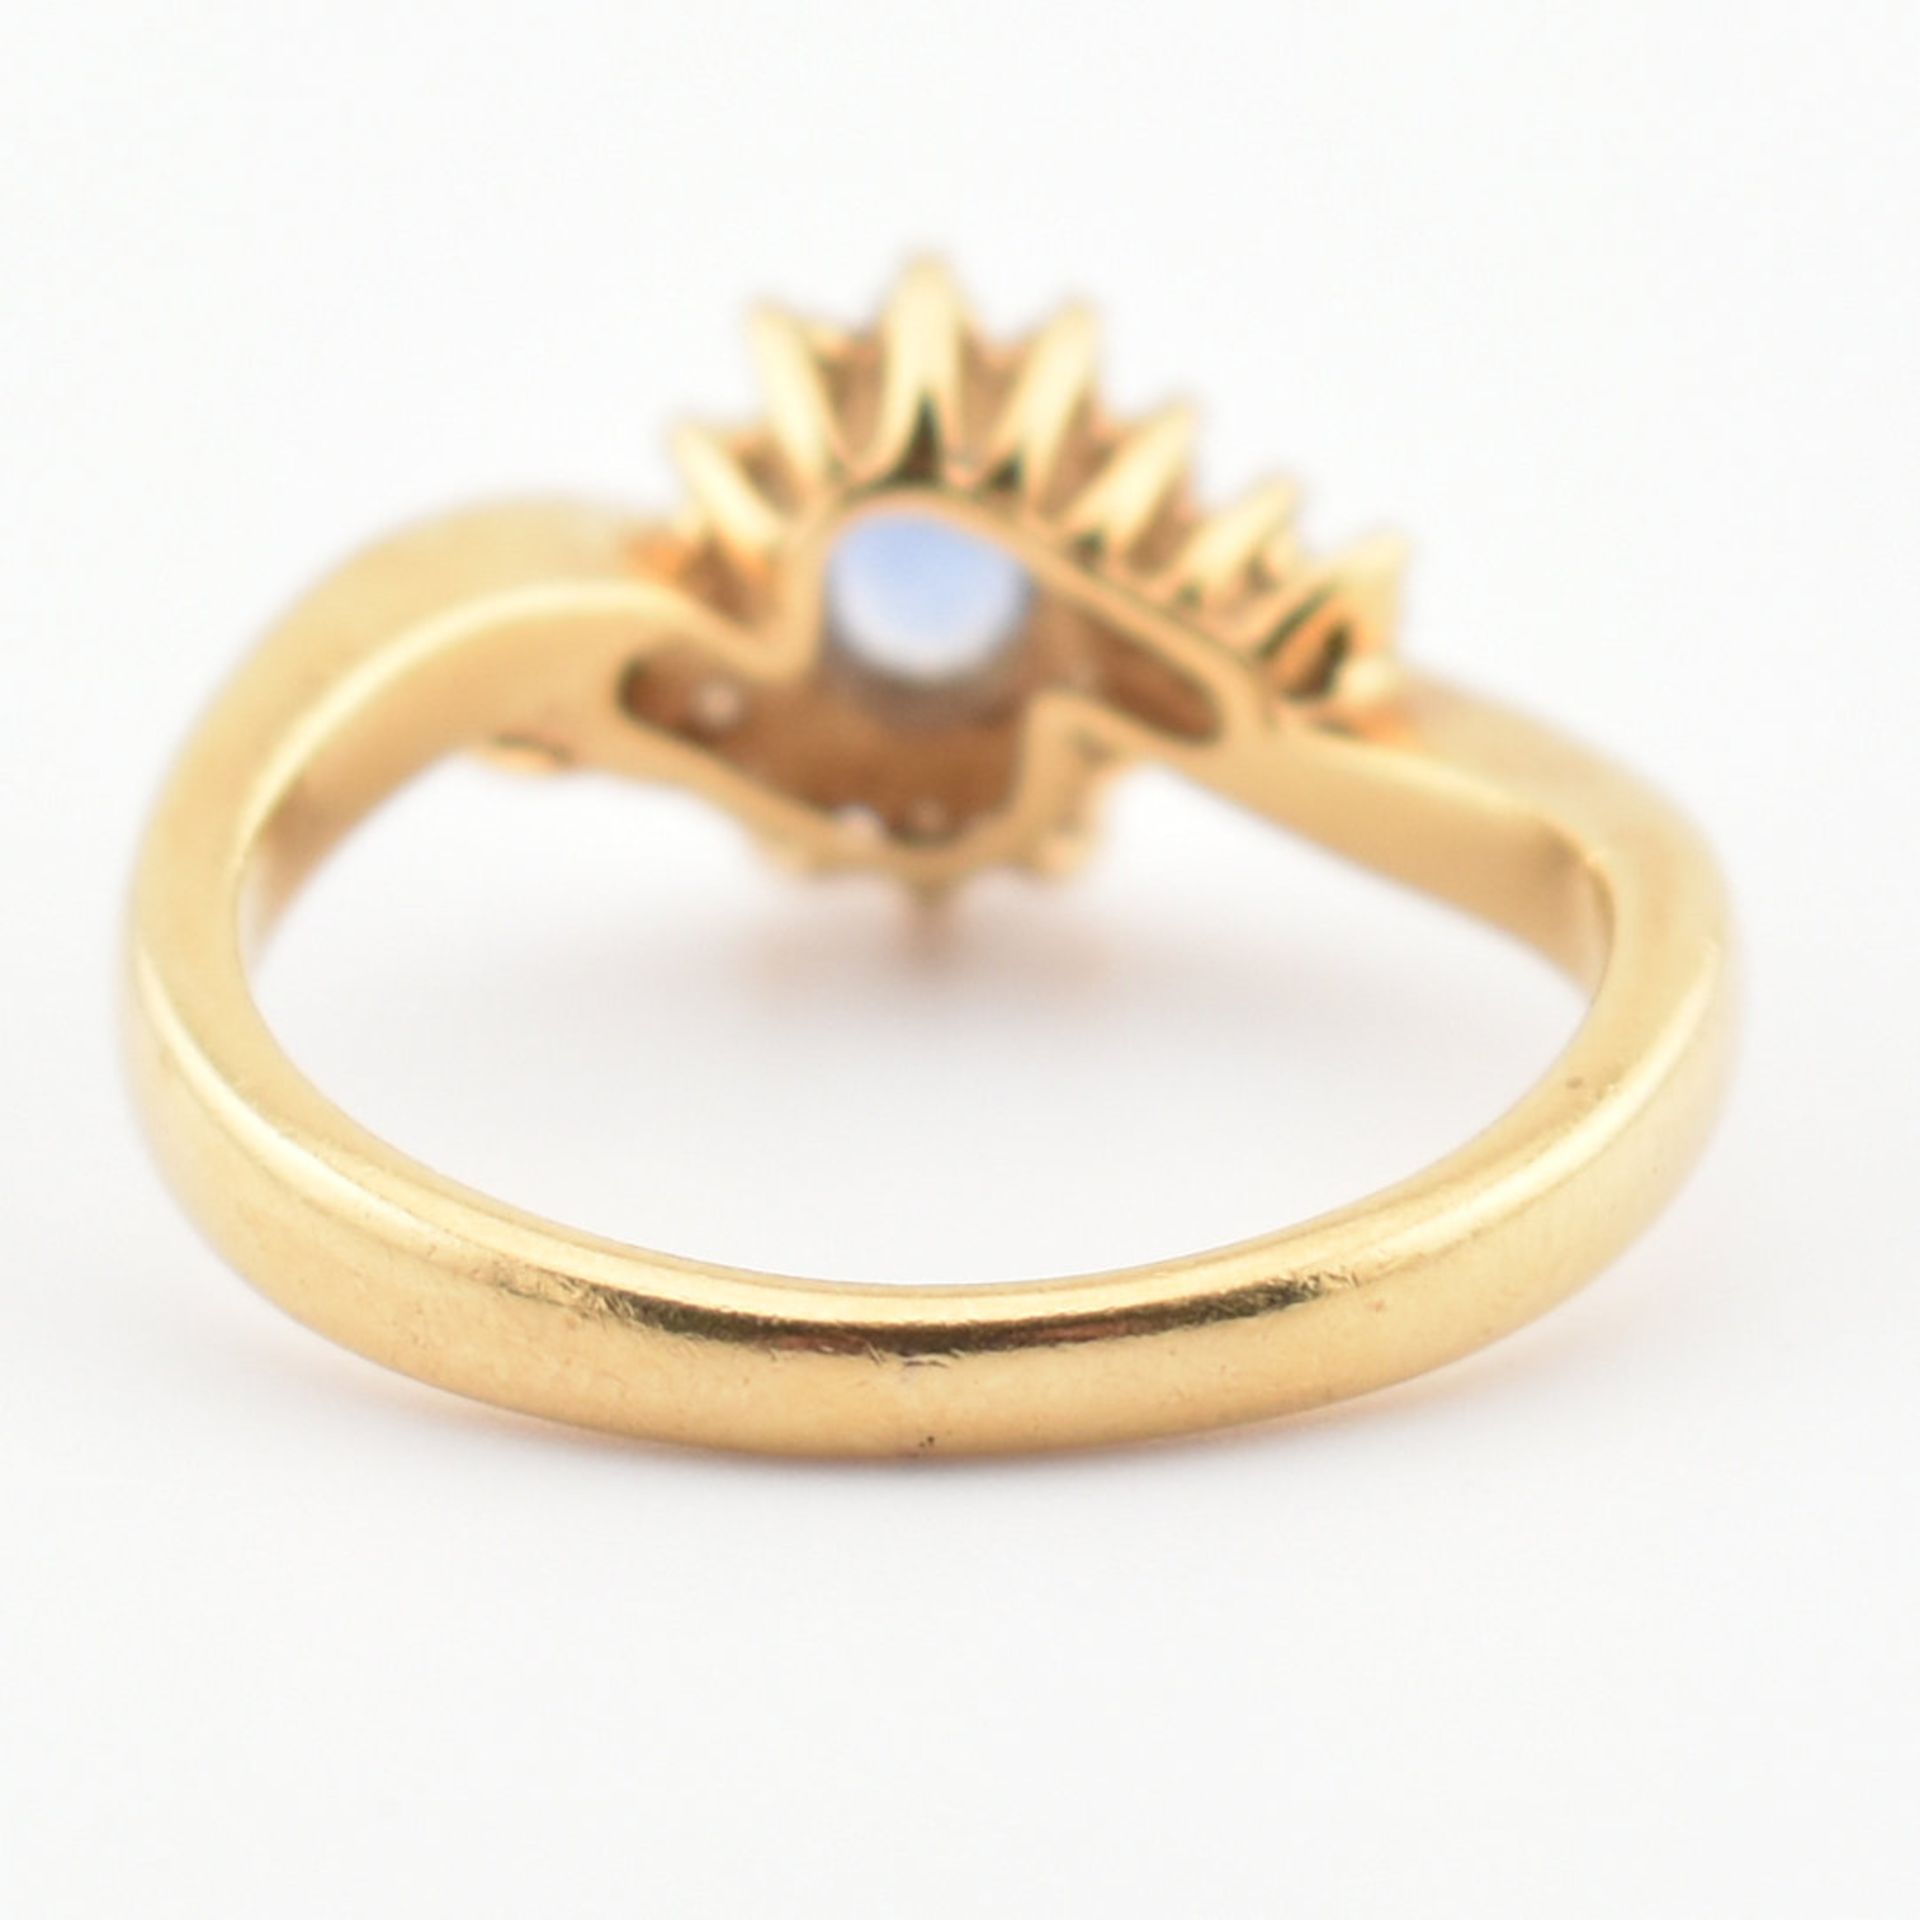 HALLMARKED 18CT GOLD CEYLON SAPPHIRE & DIAMOND RING - Image 6 of 8